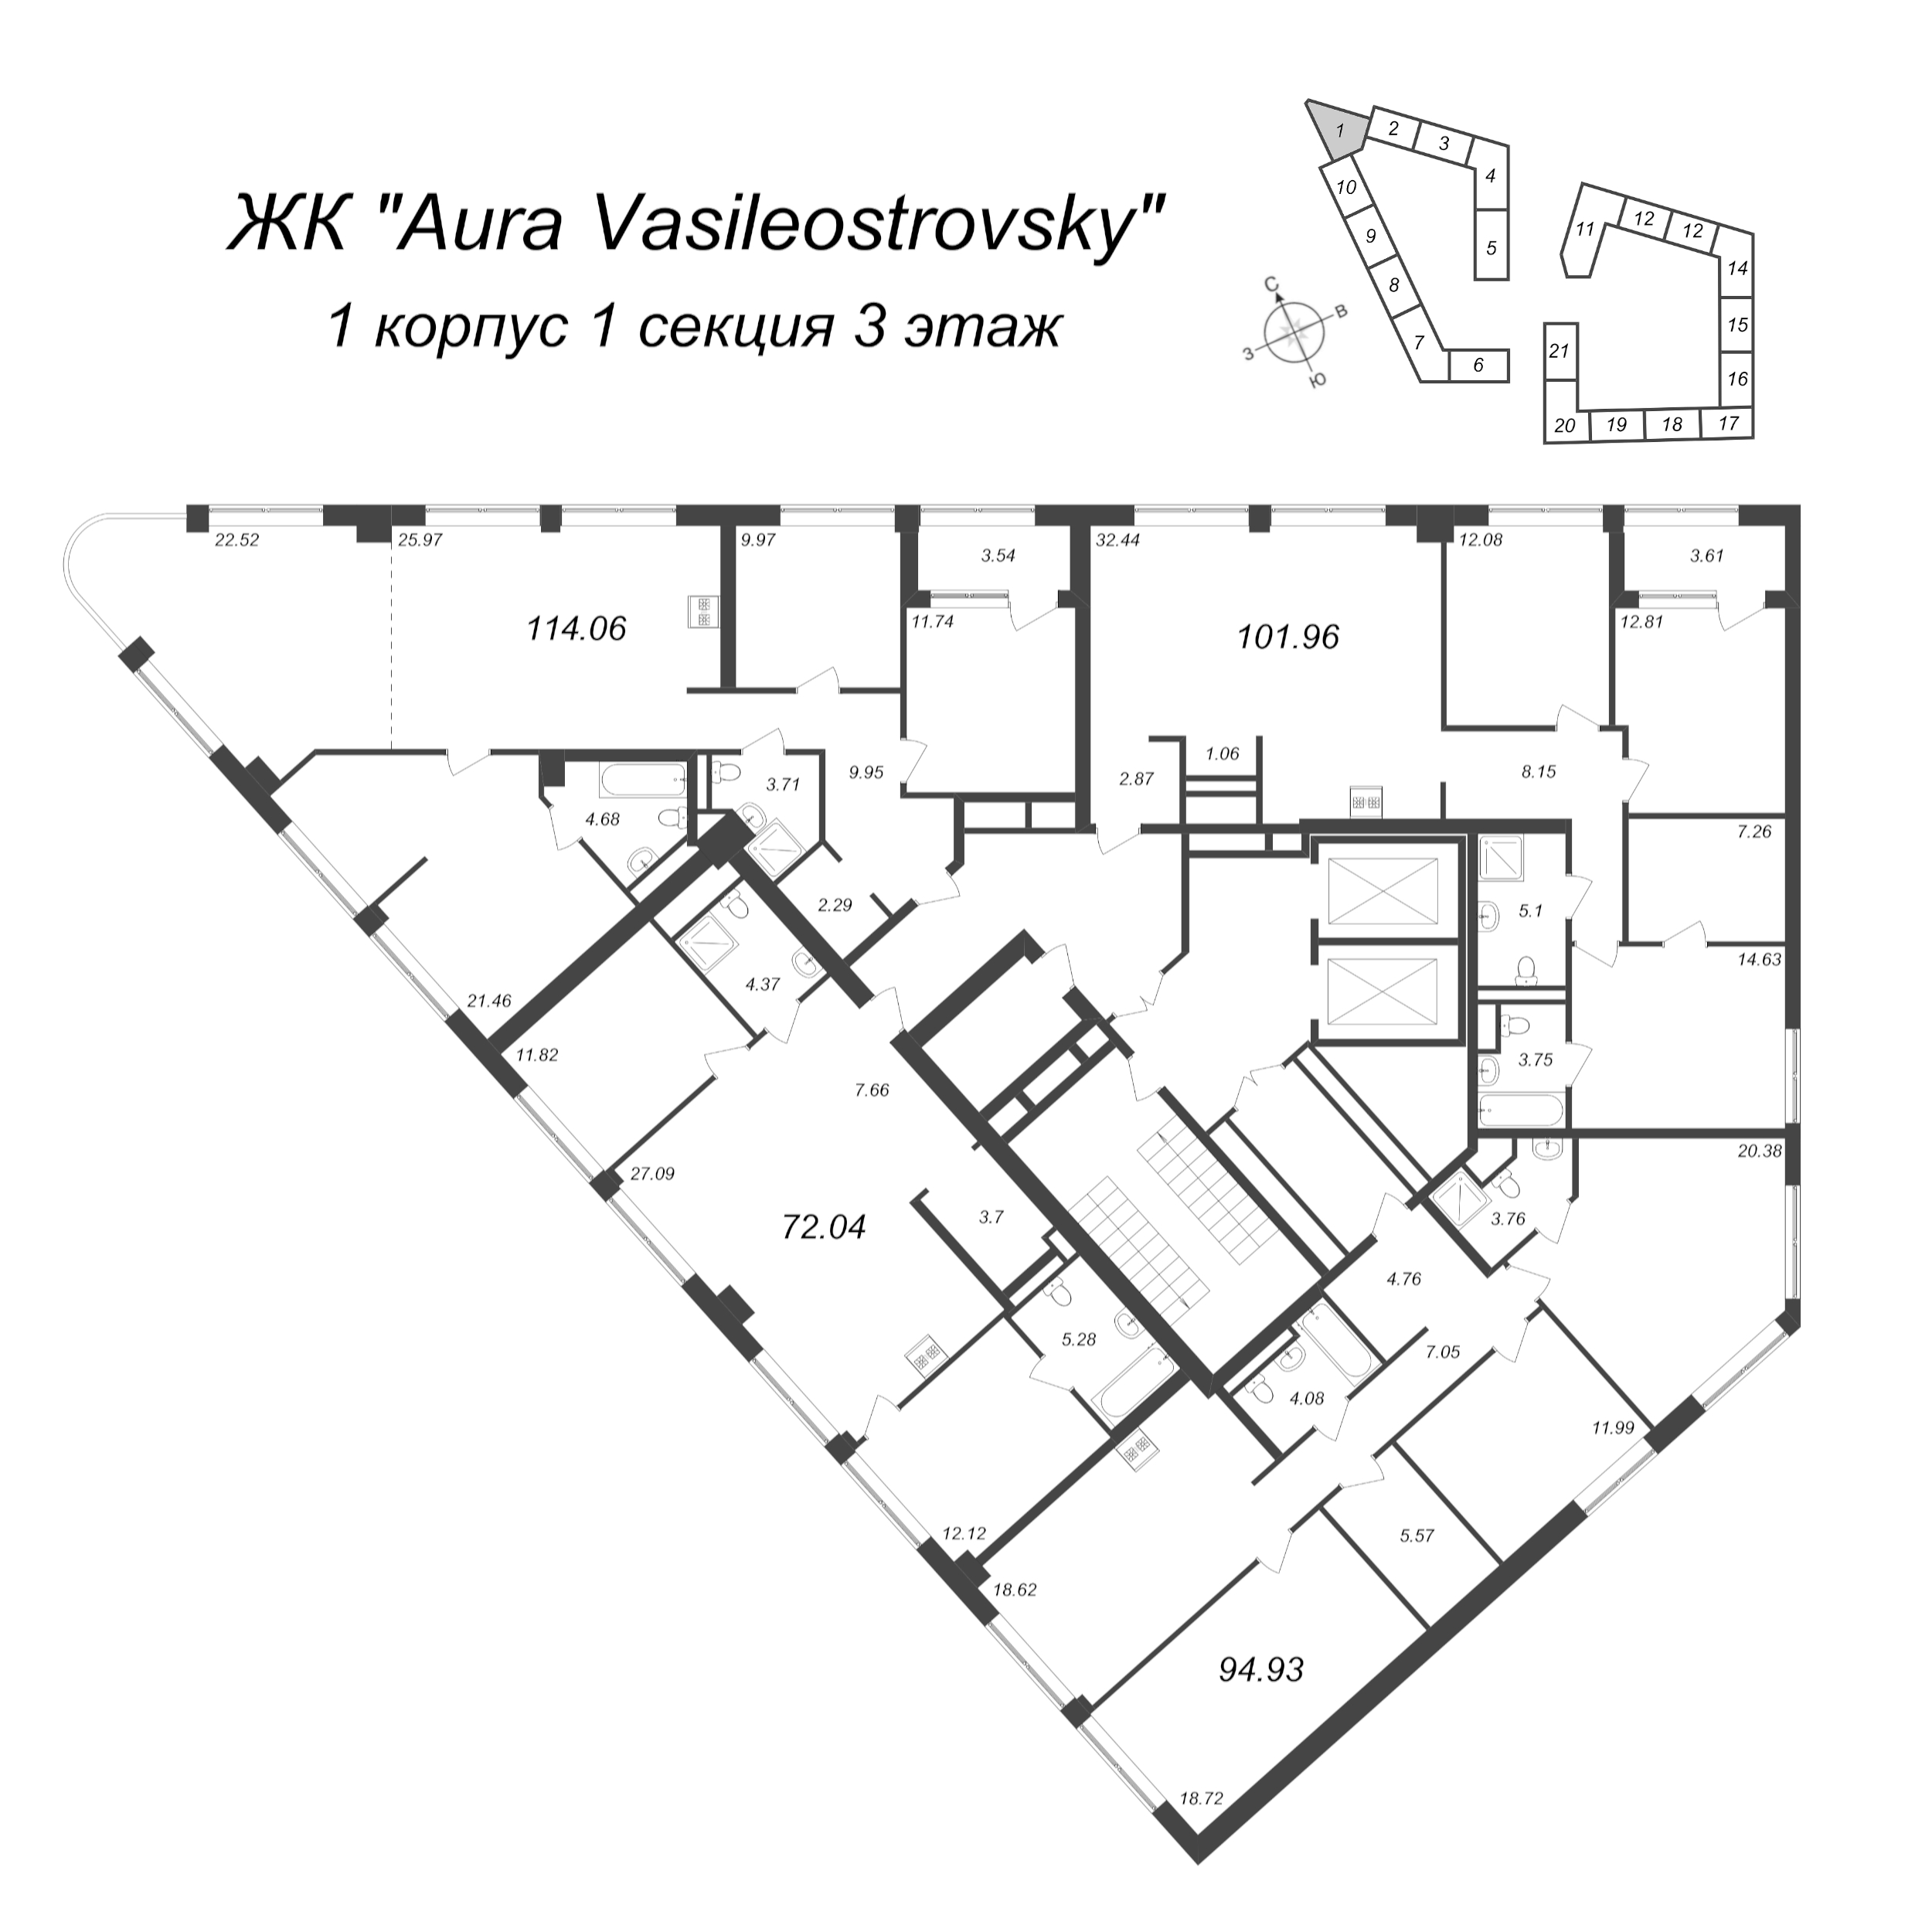 4-комнатная (Евро) квартира, 114.06 м² - планировка этажа